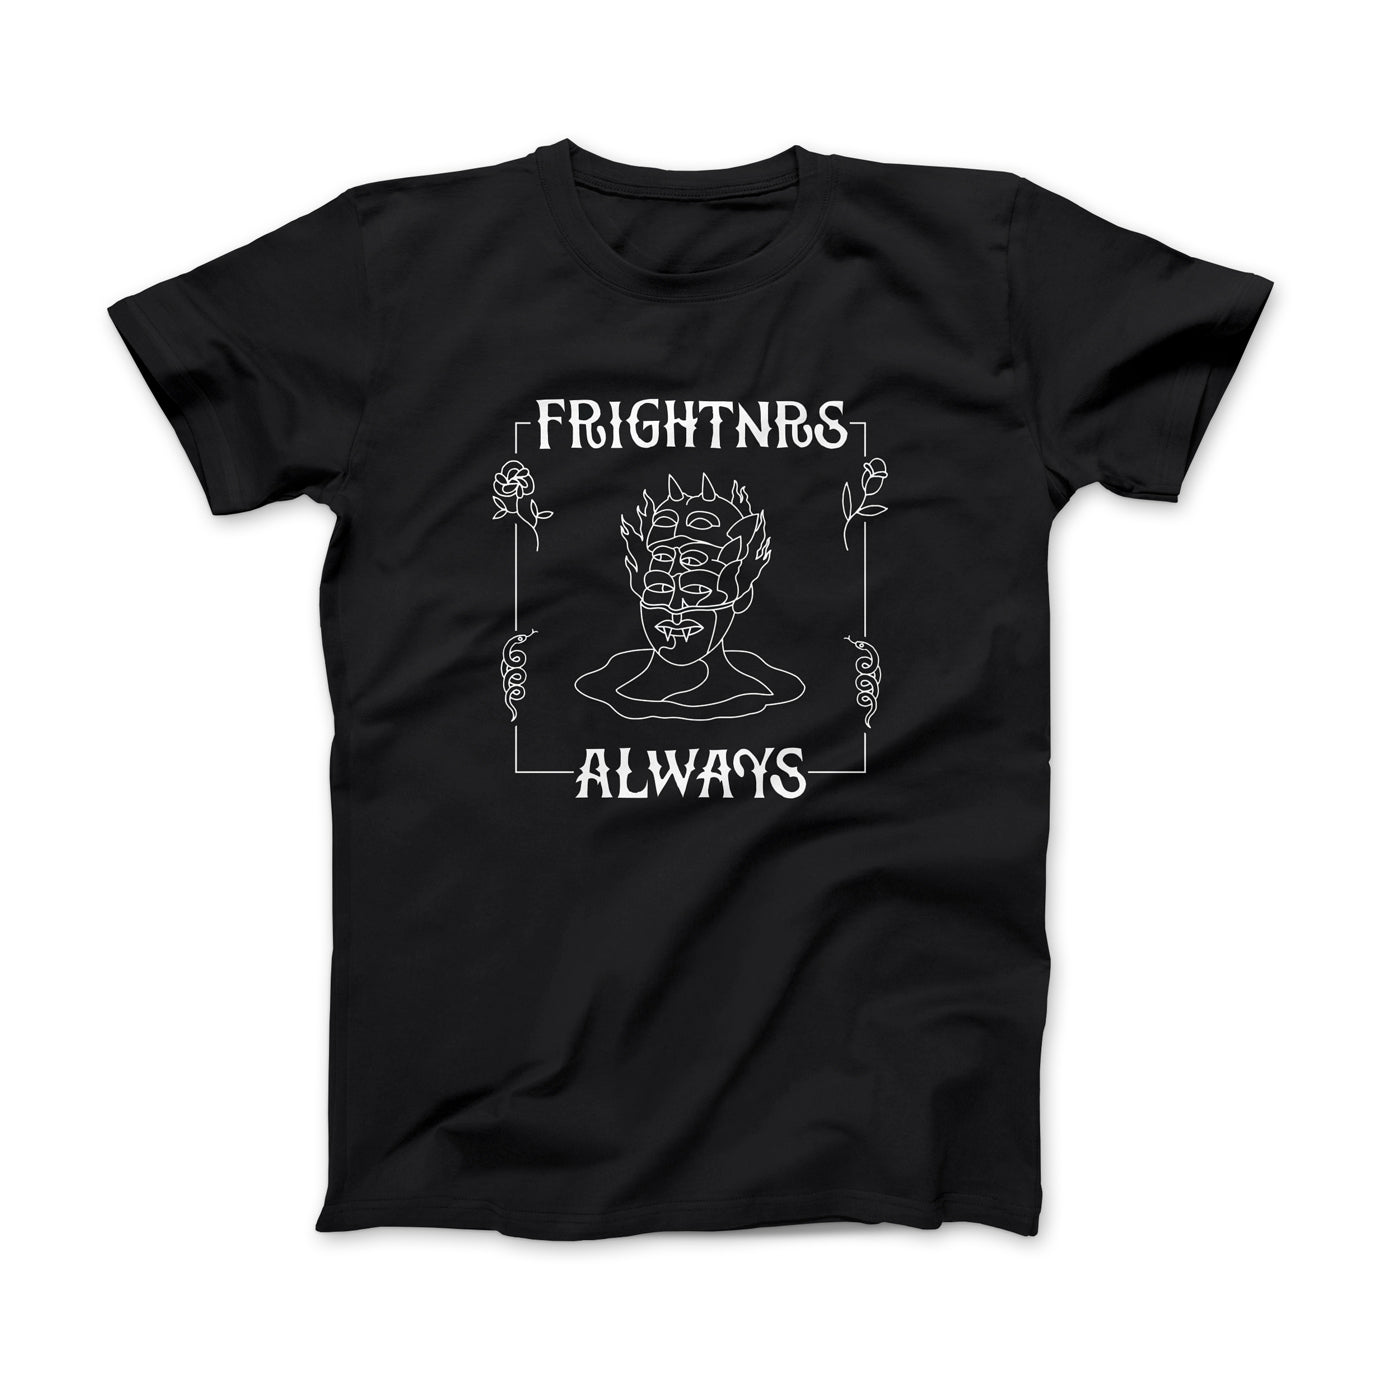 The Frightnrs "Always" T-shirt (B&W)